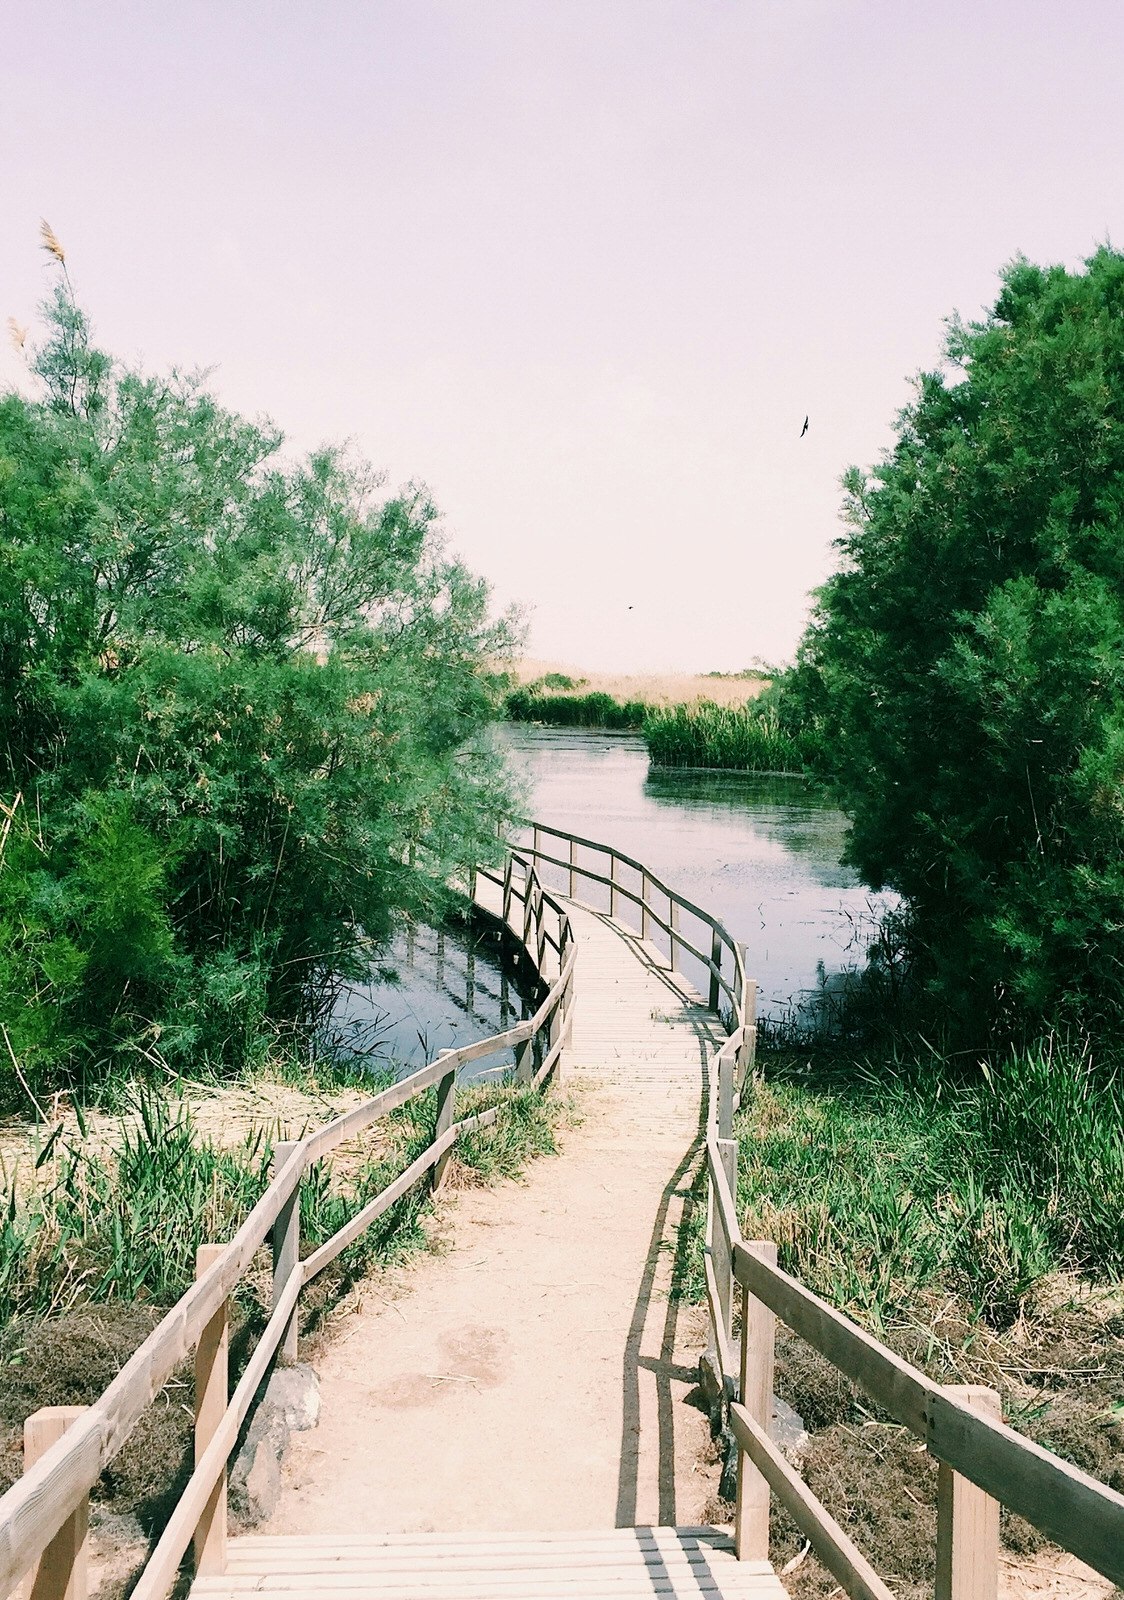 Boardwalk at Azraq Wetland Reserve. Image by Ameer Firdaus Zulkeflee / Shutterstock